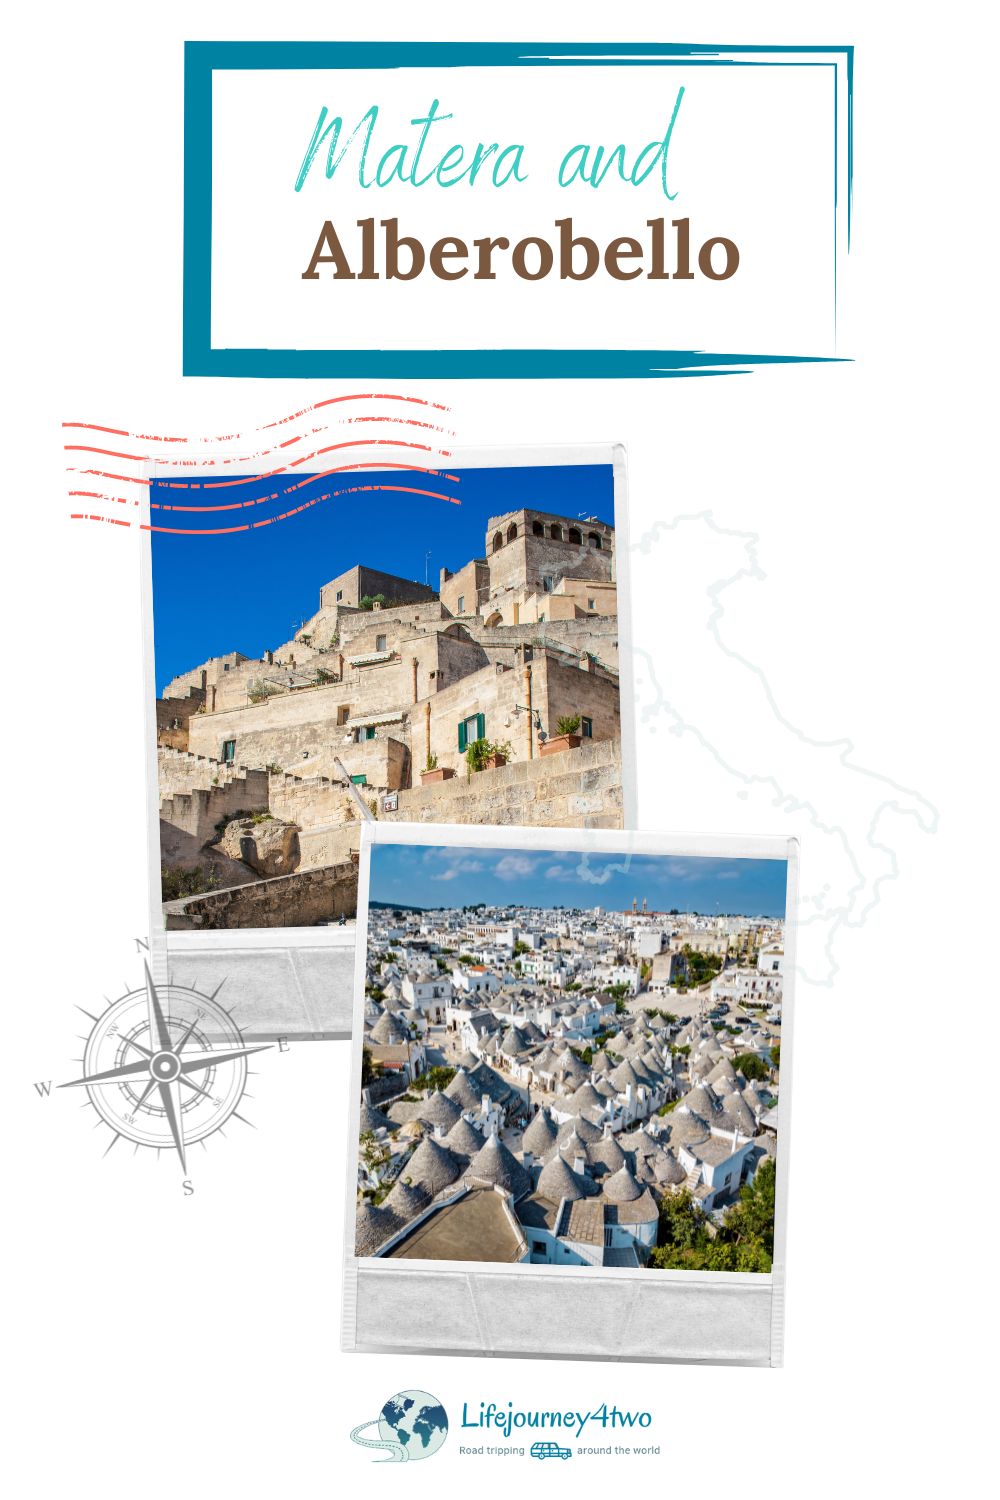 Matera and Alberobello Pinterest pin